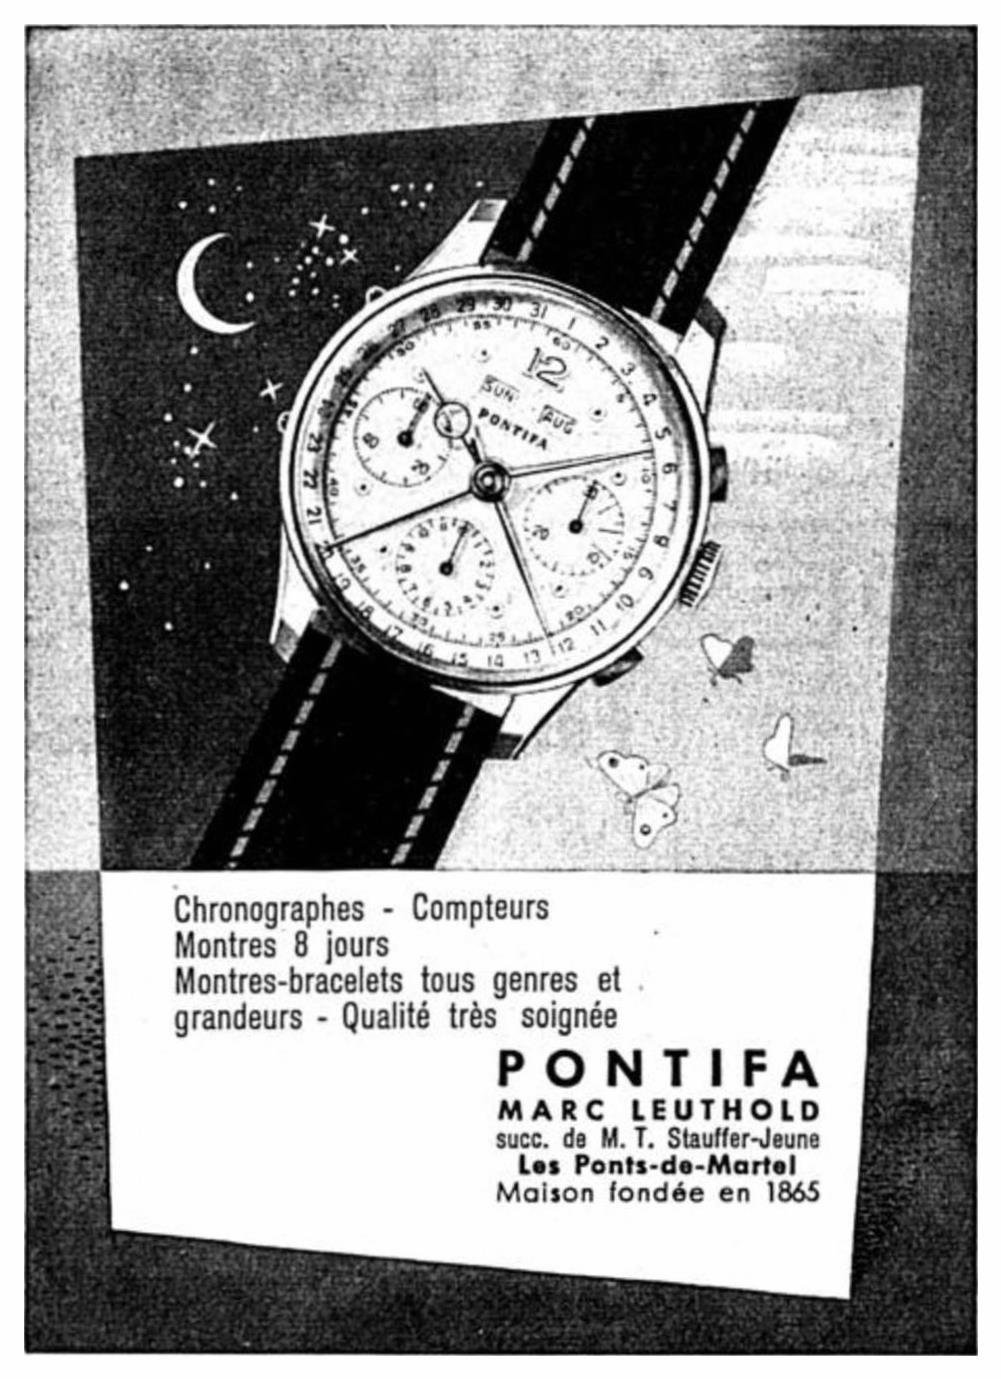 Pontifa 1955 0.jpg